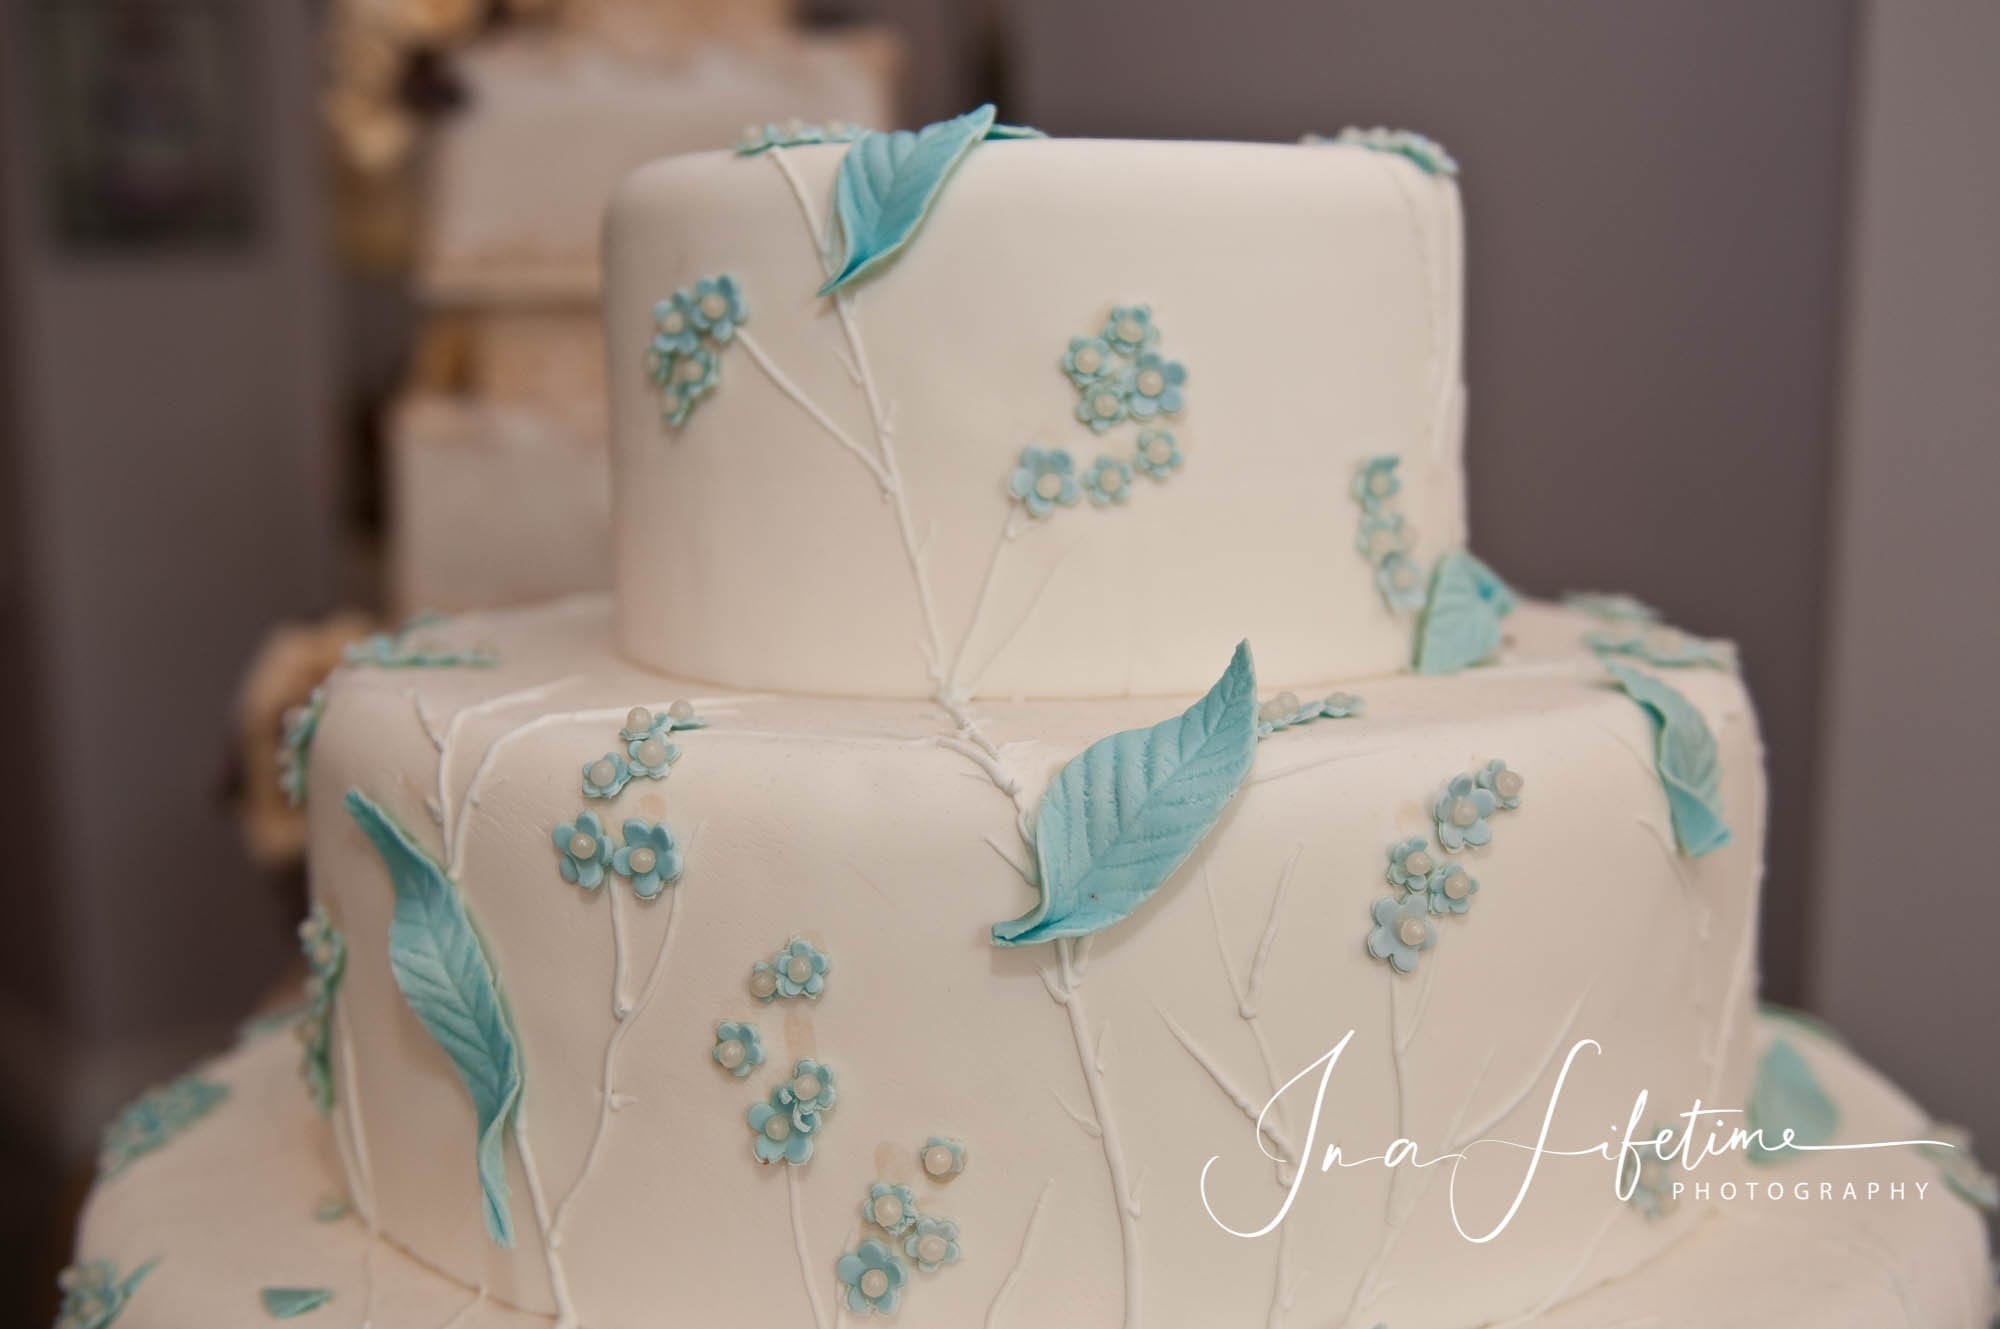 Houston wedding cake vendor and custom cake designer